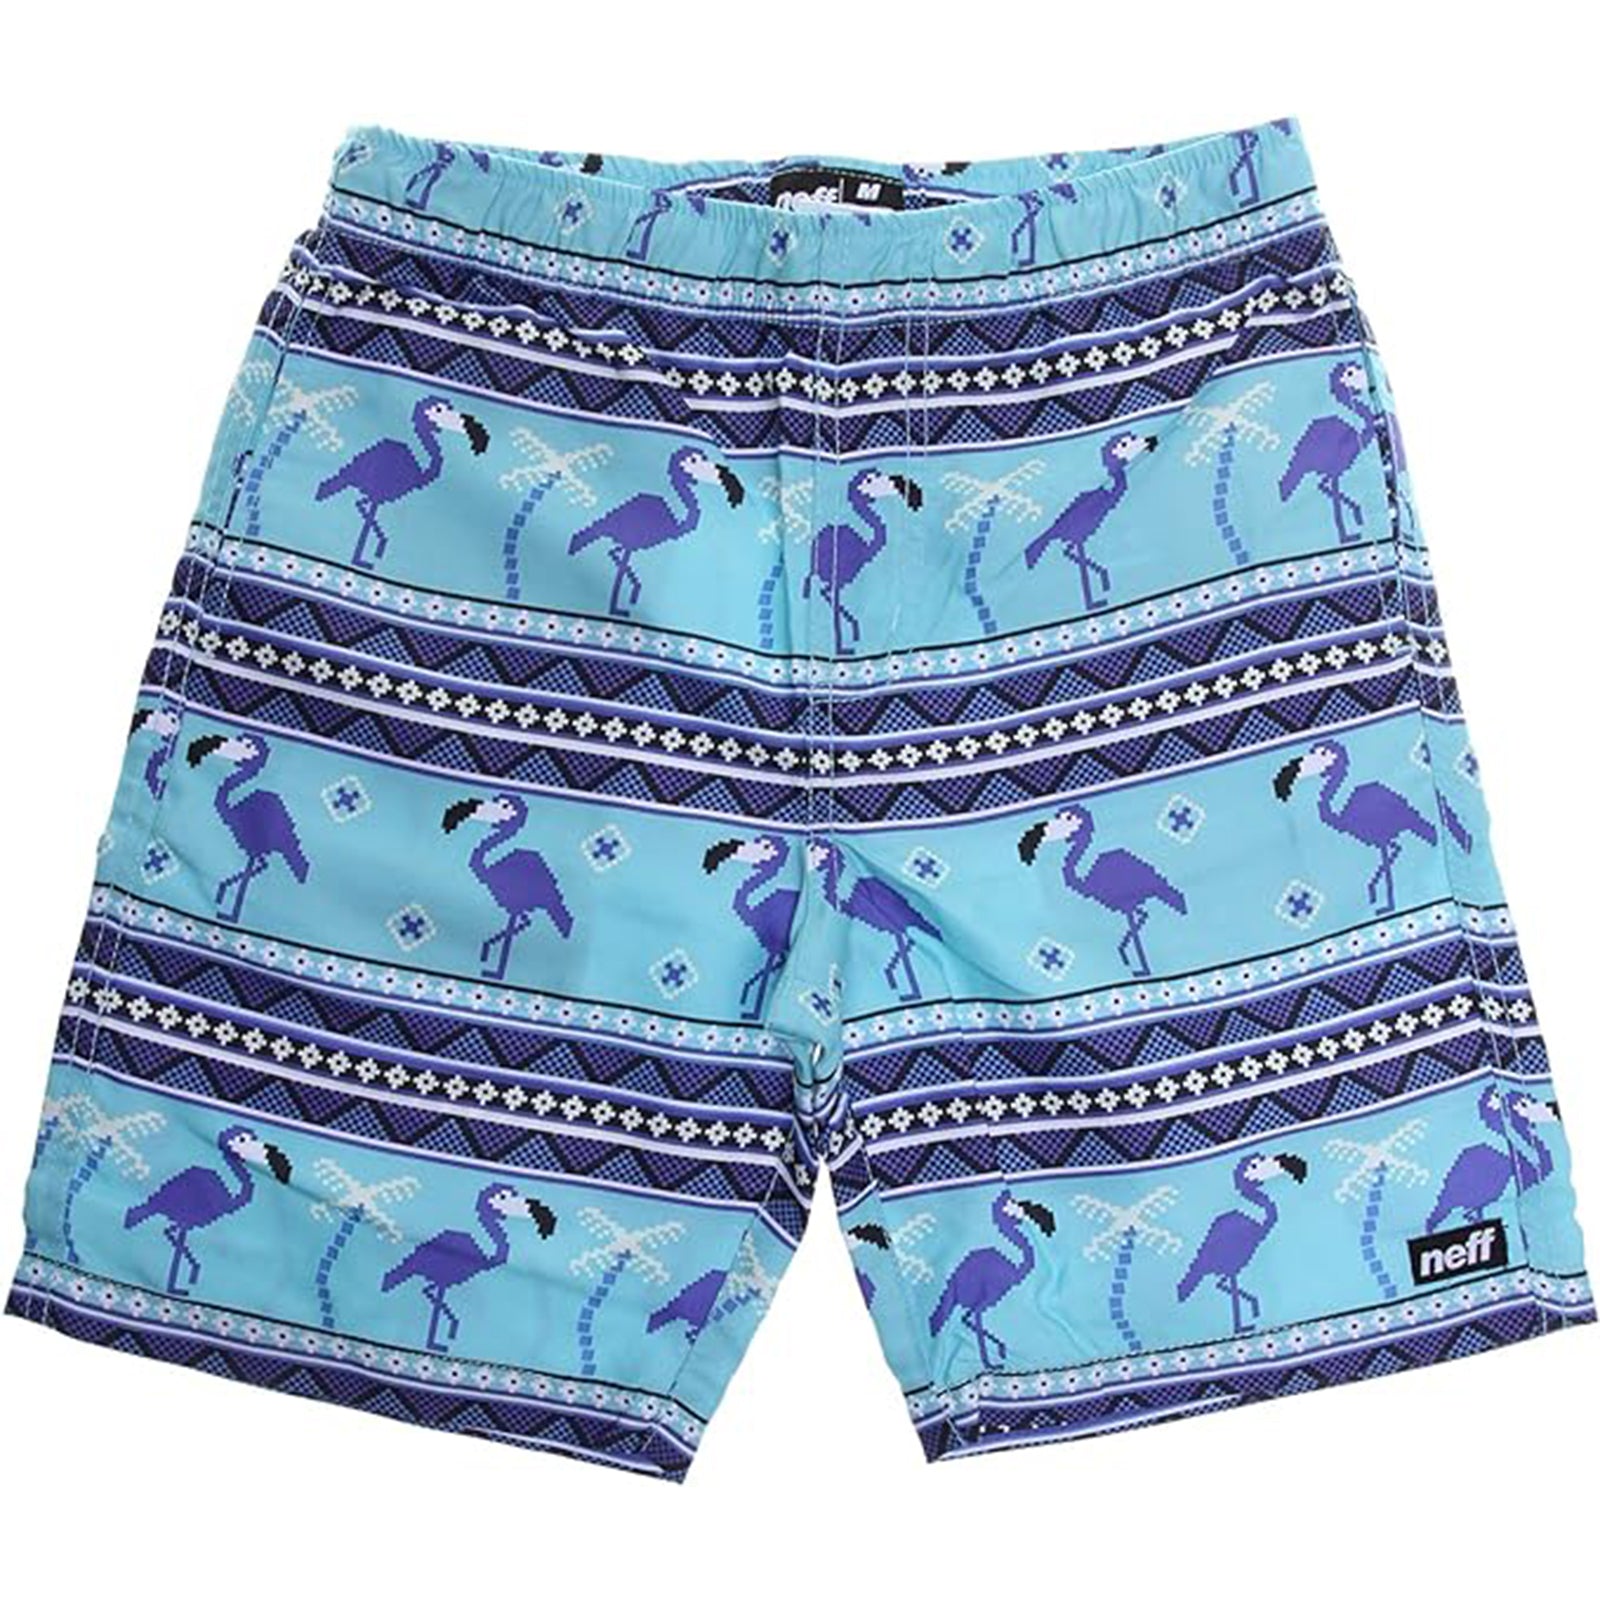 Neff Miami Hot Tub Youth Boys Boardshort Shorts-SS14Y705